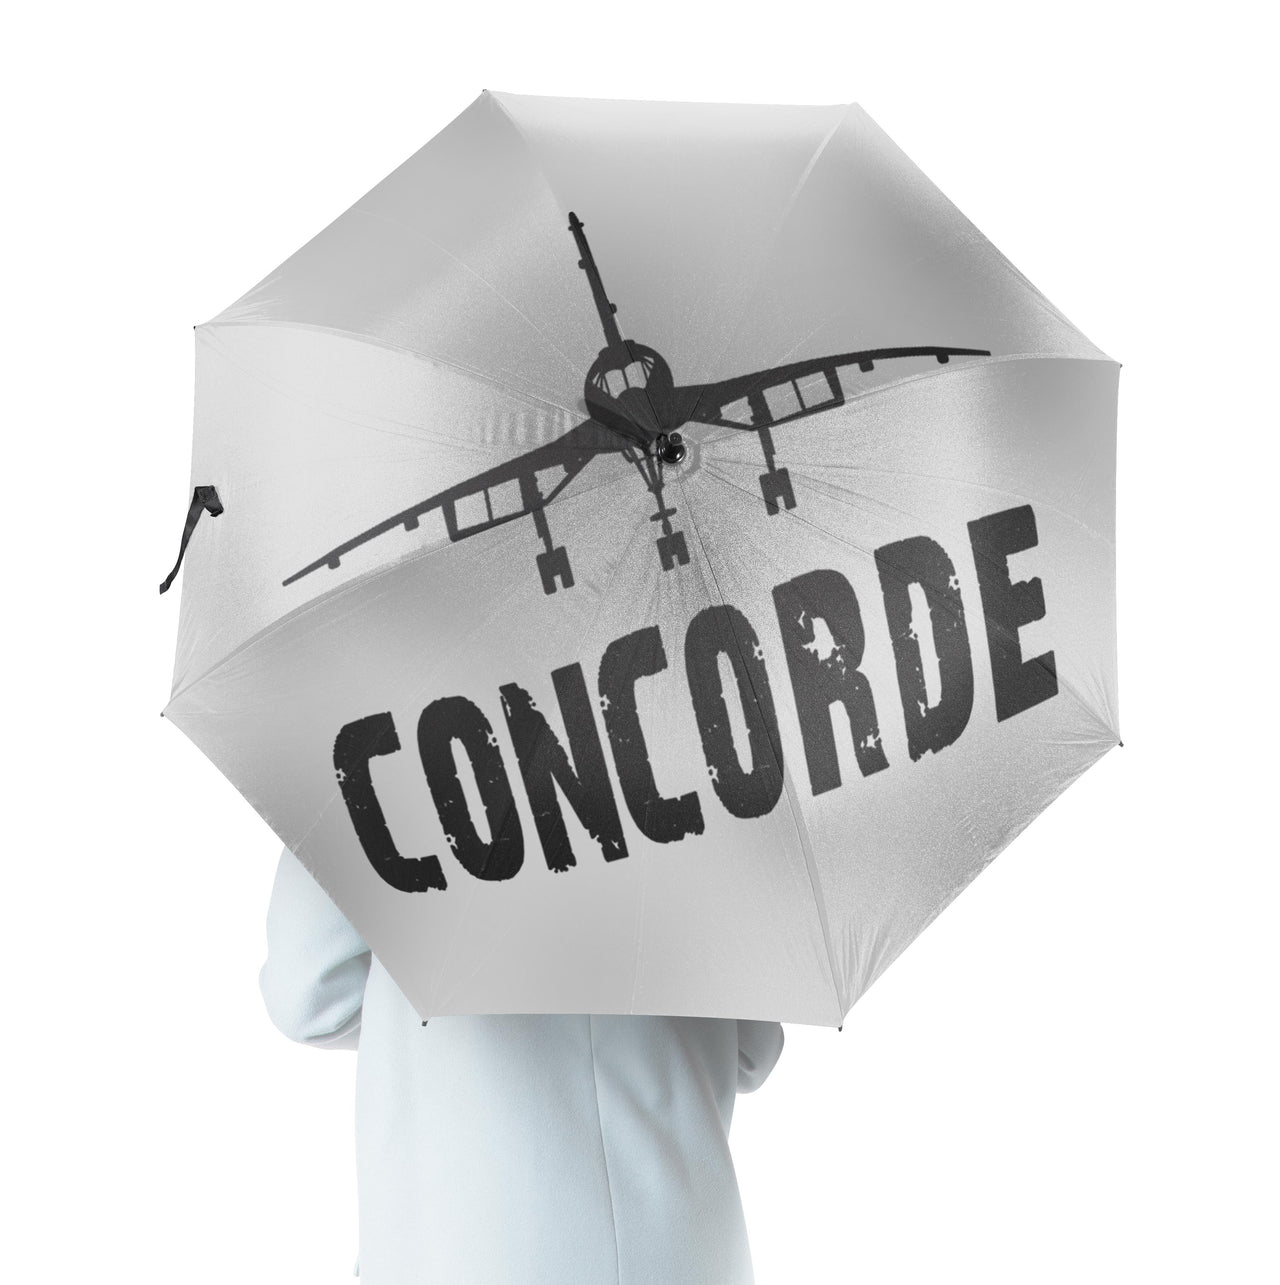 Concorde & Plane Designed Umbrella